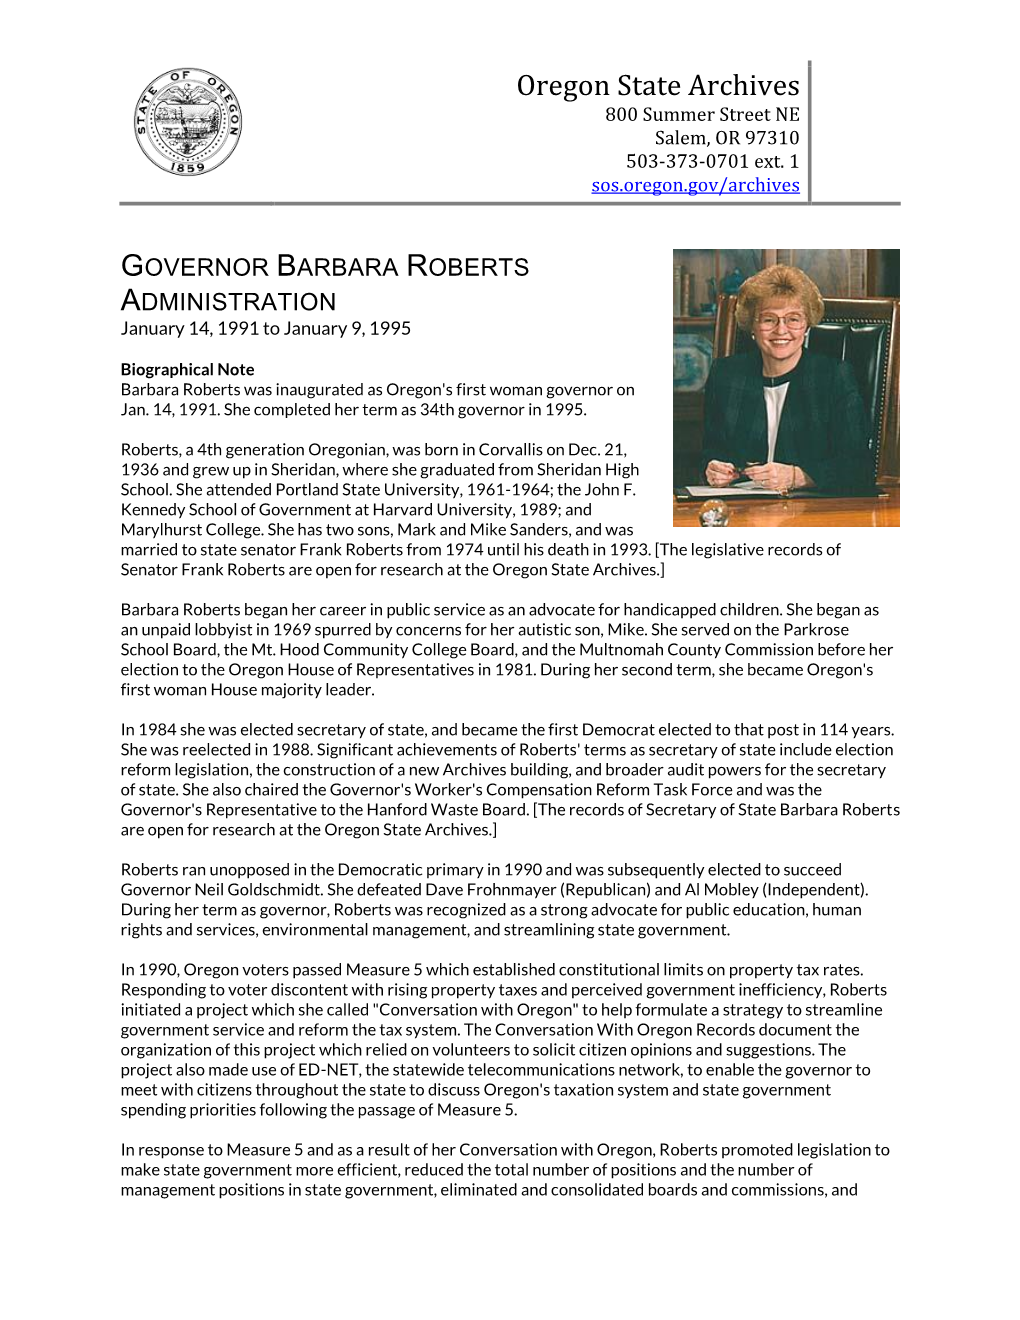 Governor Barbara Roberts Biographical Note